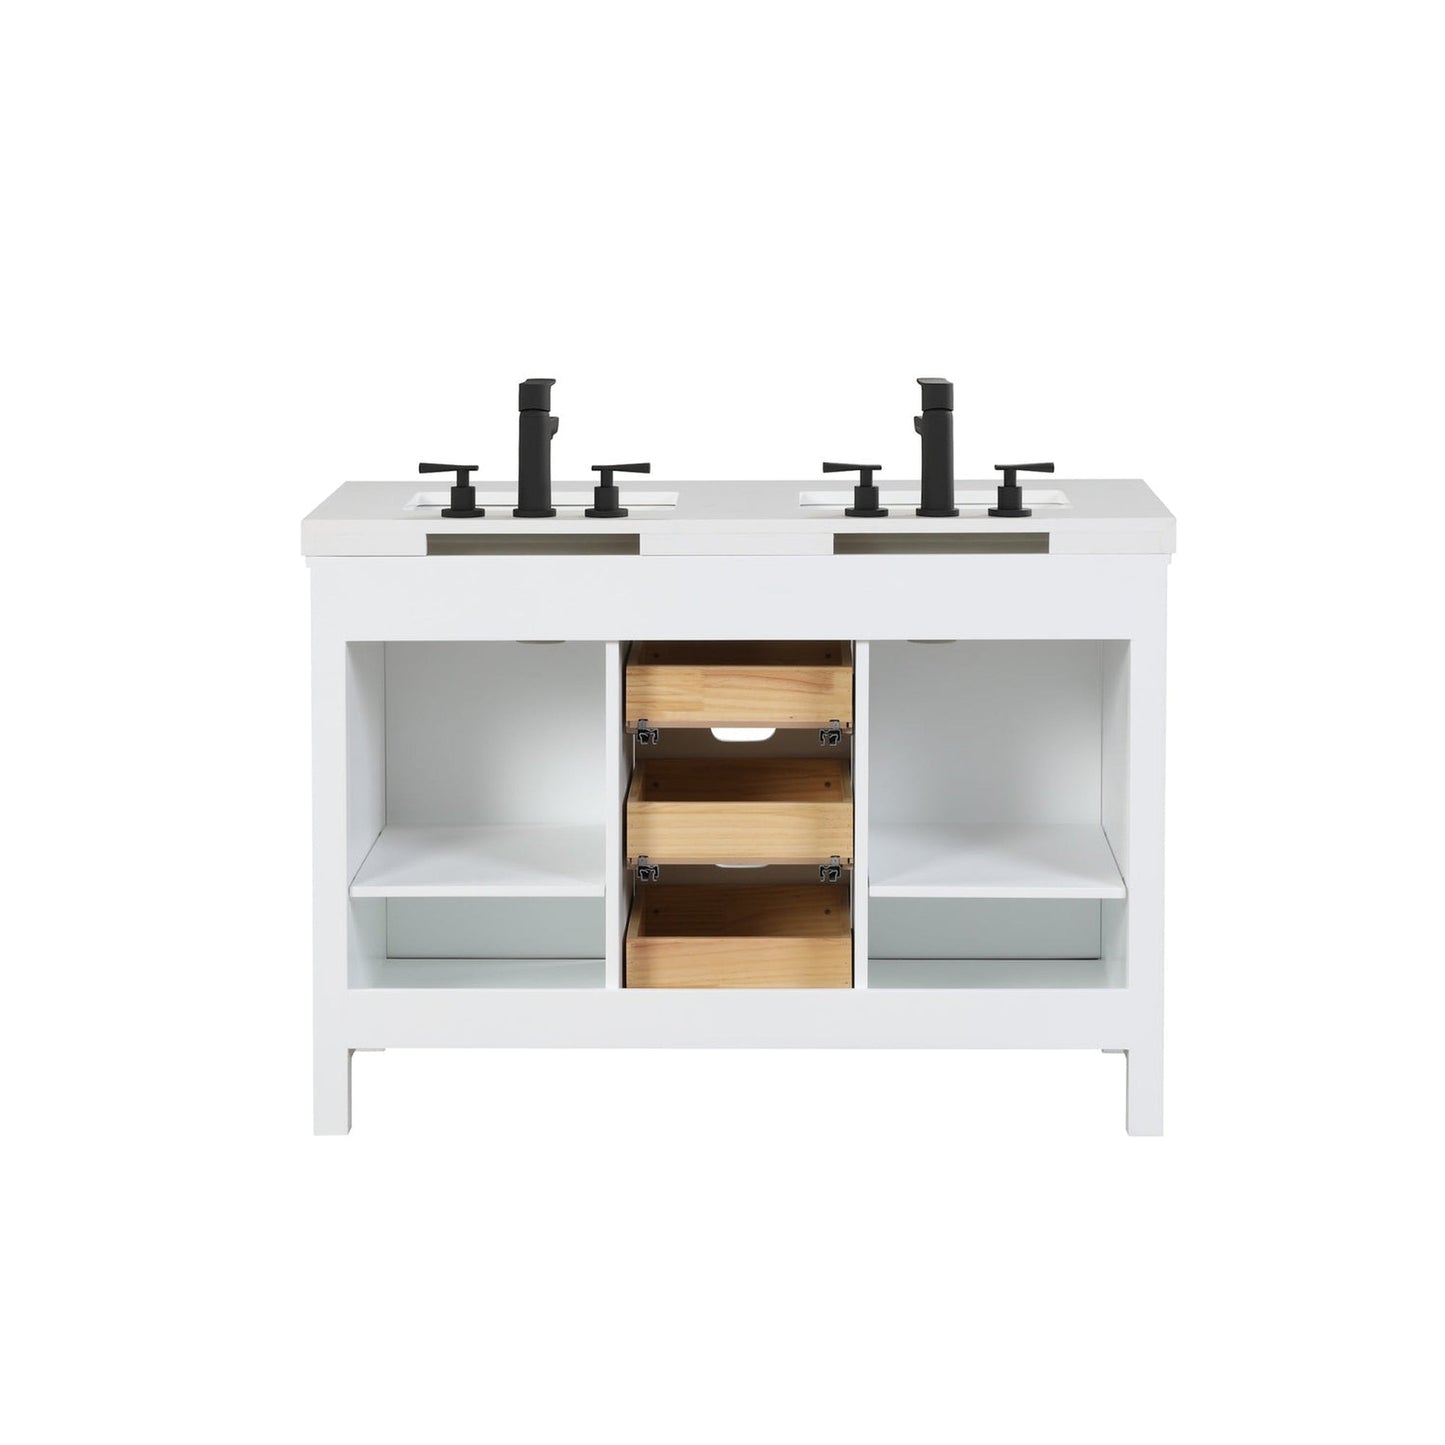 Eviva Dallas 48” x 34” White Freestanding Bathroom Vanity With White Granite Countertop and Double Undermount Sink